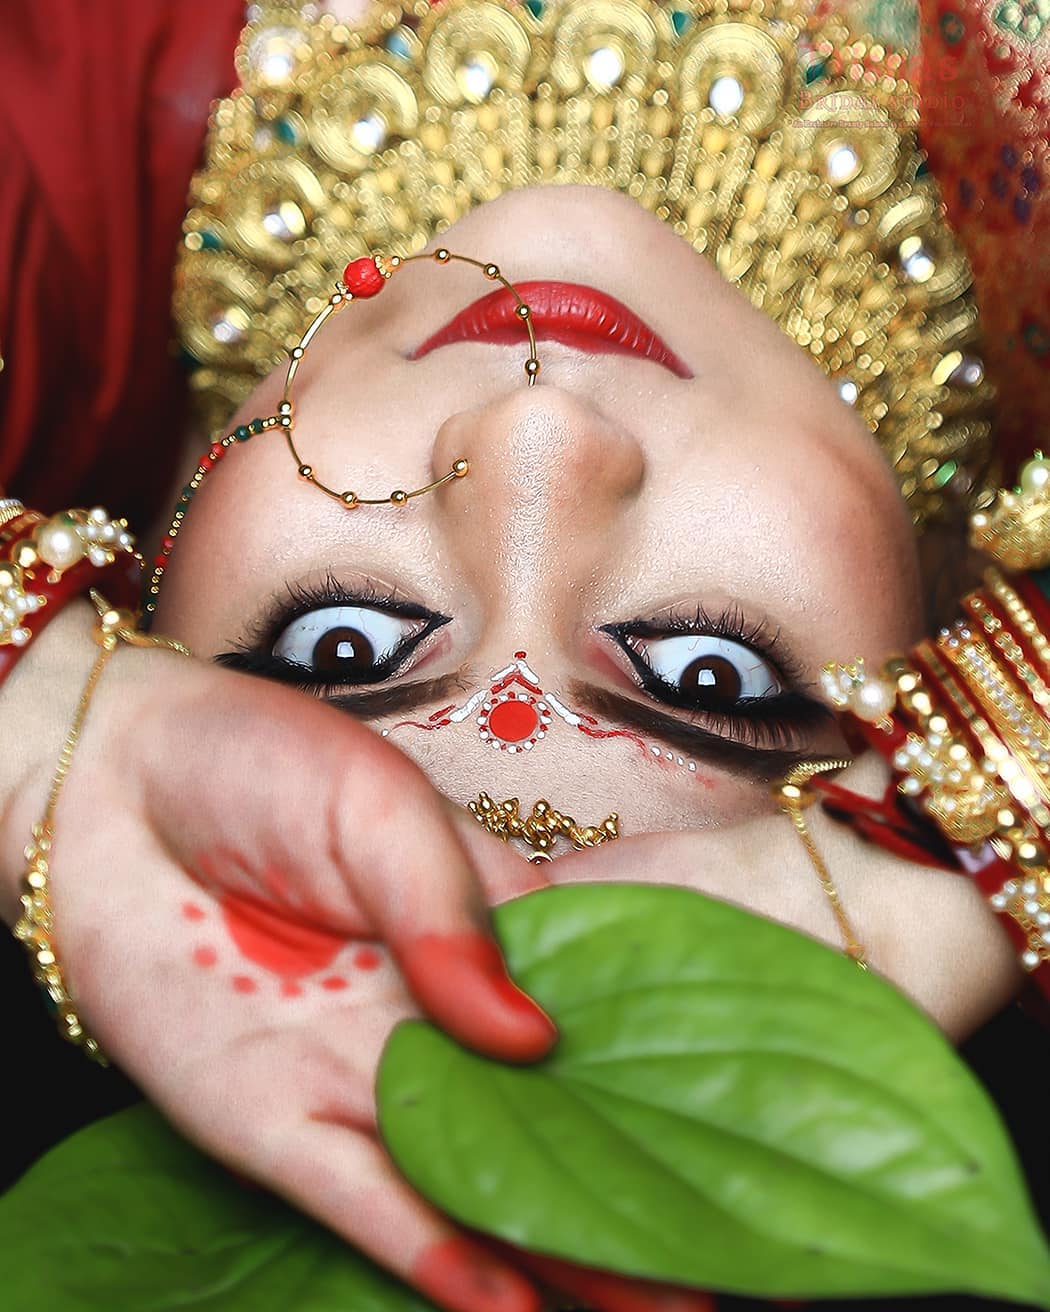 Bengali bride shoot.. MUA : @dishabeautysaloonacademynikol
In frame : Meera
Shoot by : @dip_memento_photography
.
.
#portraits #dslrofficial #indianphotographers 
#portraitsindia #canon #colorsofindia
#photosofindia 
#fashion
#photographersofindia
#portraitsindia #fashionblogger #dipmementophotography
#makeupartist #photography #portraitvision #portraitmood #indianportraits #colorsofindia #portraitphotography #ahmedabad #indianpictures 
#portraitmood #portraits_india #bokehphotography #bongportrait #bokehphotography #yesindia 
@ig_calcutta @all_about_kolkata123
@kolkatasutra
@kolkataportraits 
@kolkataportraitphotographer
@stories_from_lens 
@kolkatas_paparazzi
@globe_portraits
@ig_biswajit 
@portvisual
@bong_crush_ 
@bong.divas 
@_bong.queen_
@bong_fashion_bloggers
@bong_princess
@bong_angles
@beauty_of_bengal
@bong_bomb
@bongoporichoy
@indian_fashion_bloggers
#bongportrait #bongcrush_official
@bestportraitsindia #9924227745 #dipmementophotography #dip_memento_photography